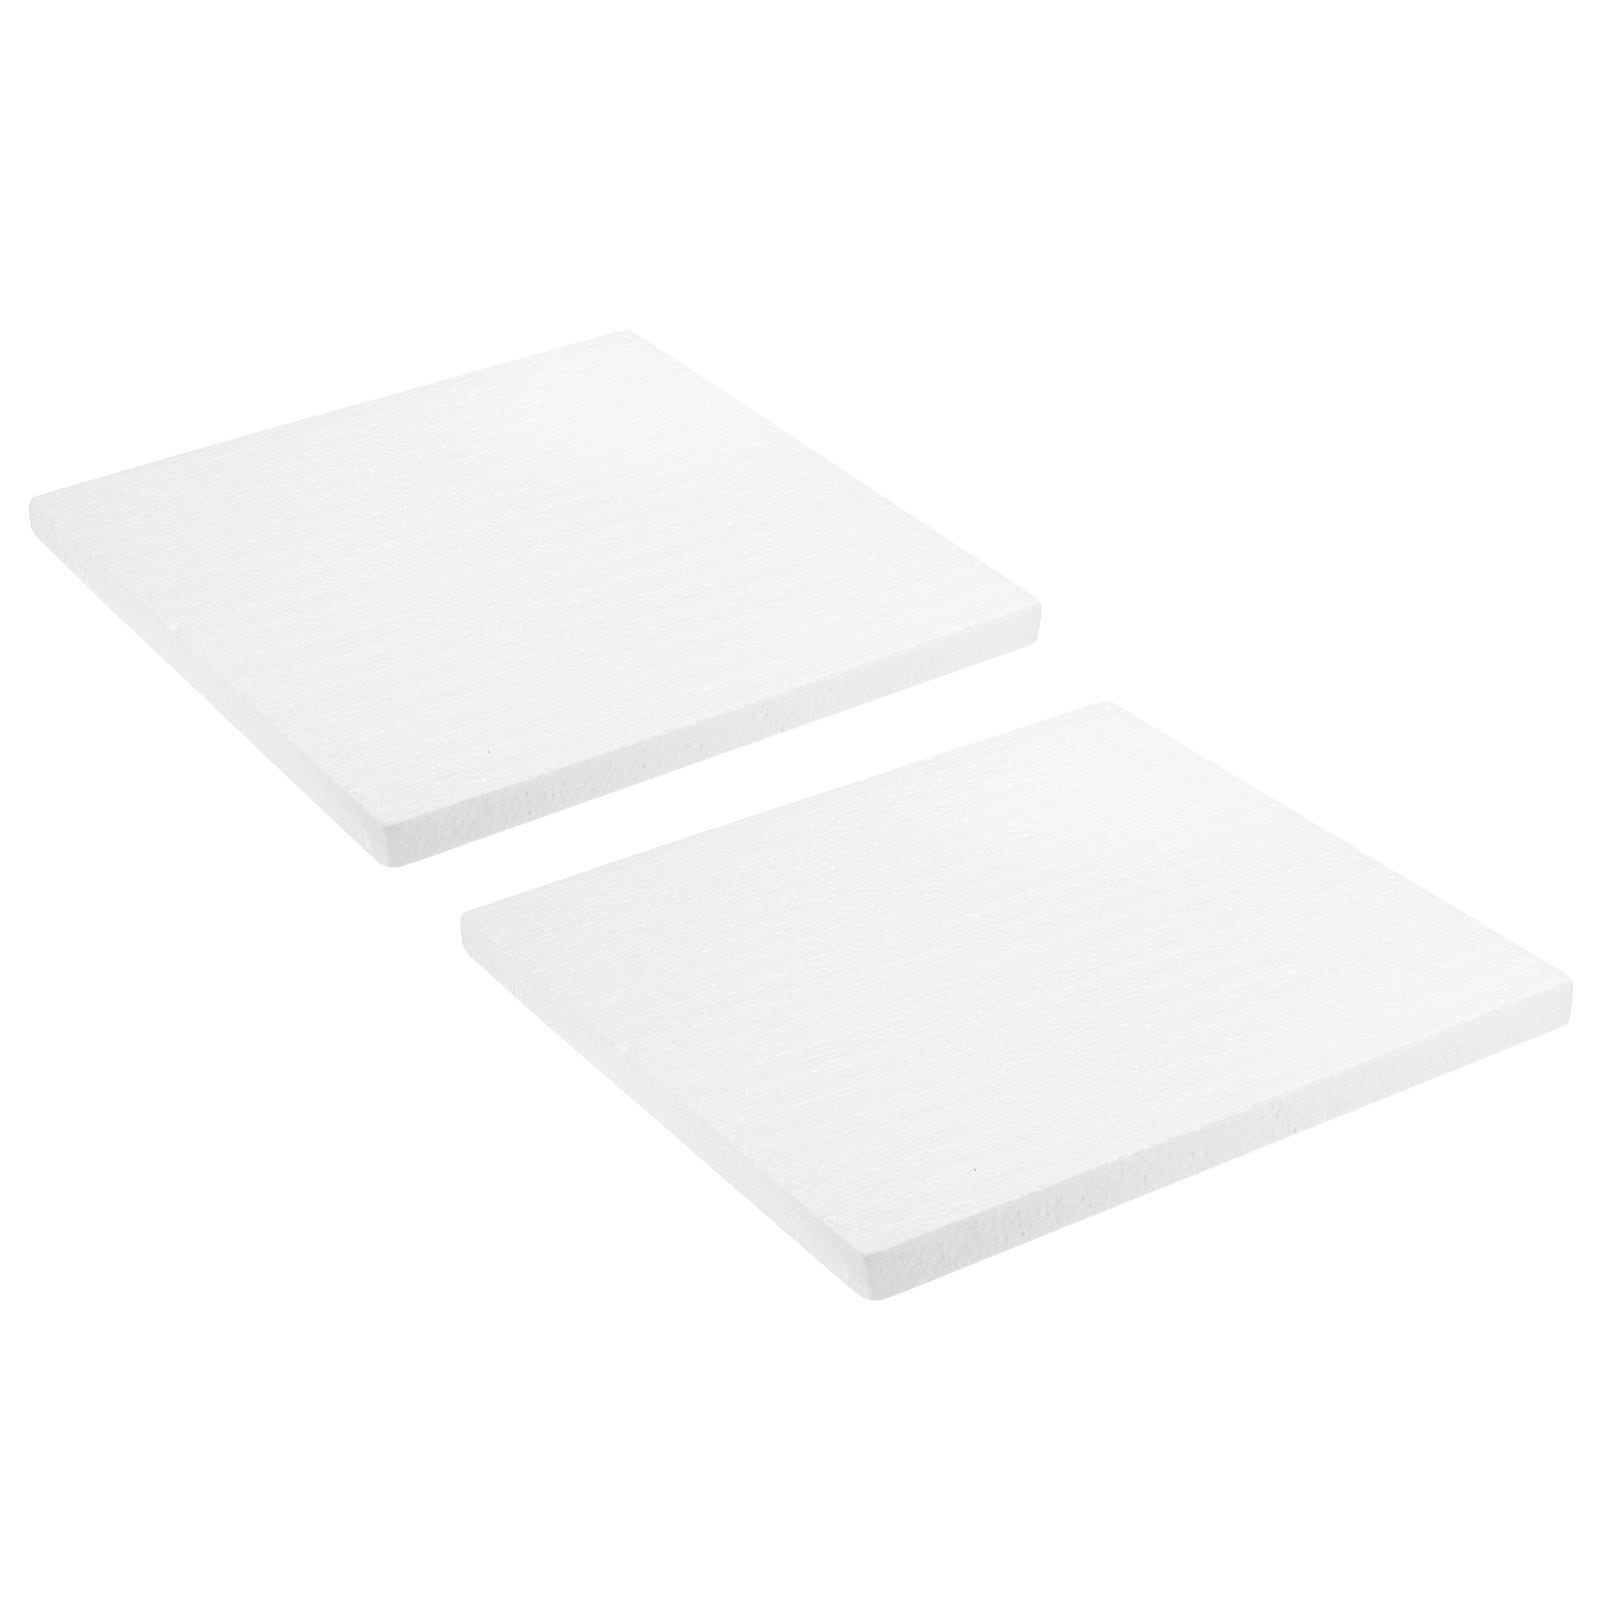 Foam Sheets for Crafts 11.81x11.81x0.79 Inch Polystyrene Foam